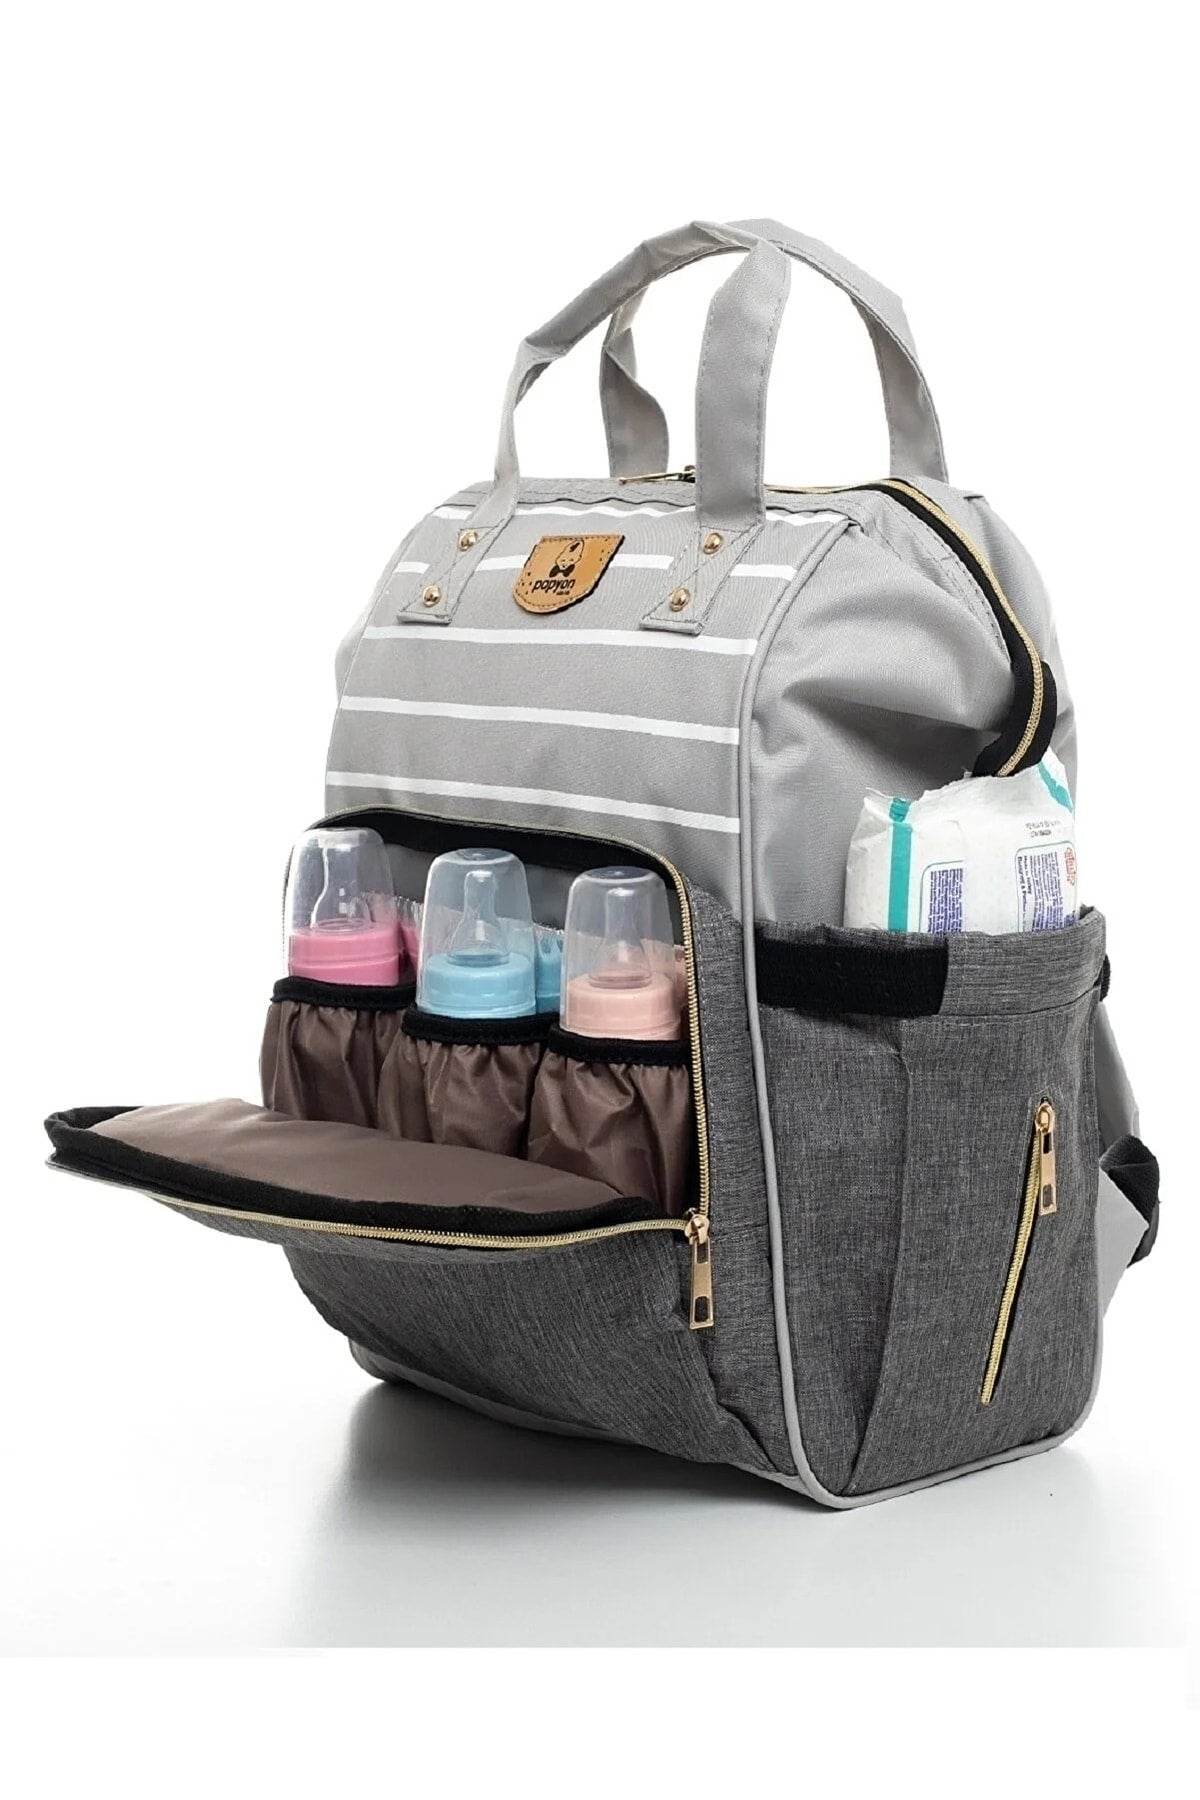 Mother Baby Care Backpack Baby Bottle Thermos Eyed Metal Hook Stroller Hanger Bracket Gift!!!